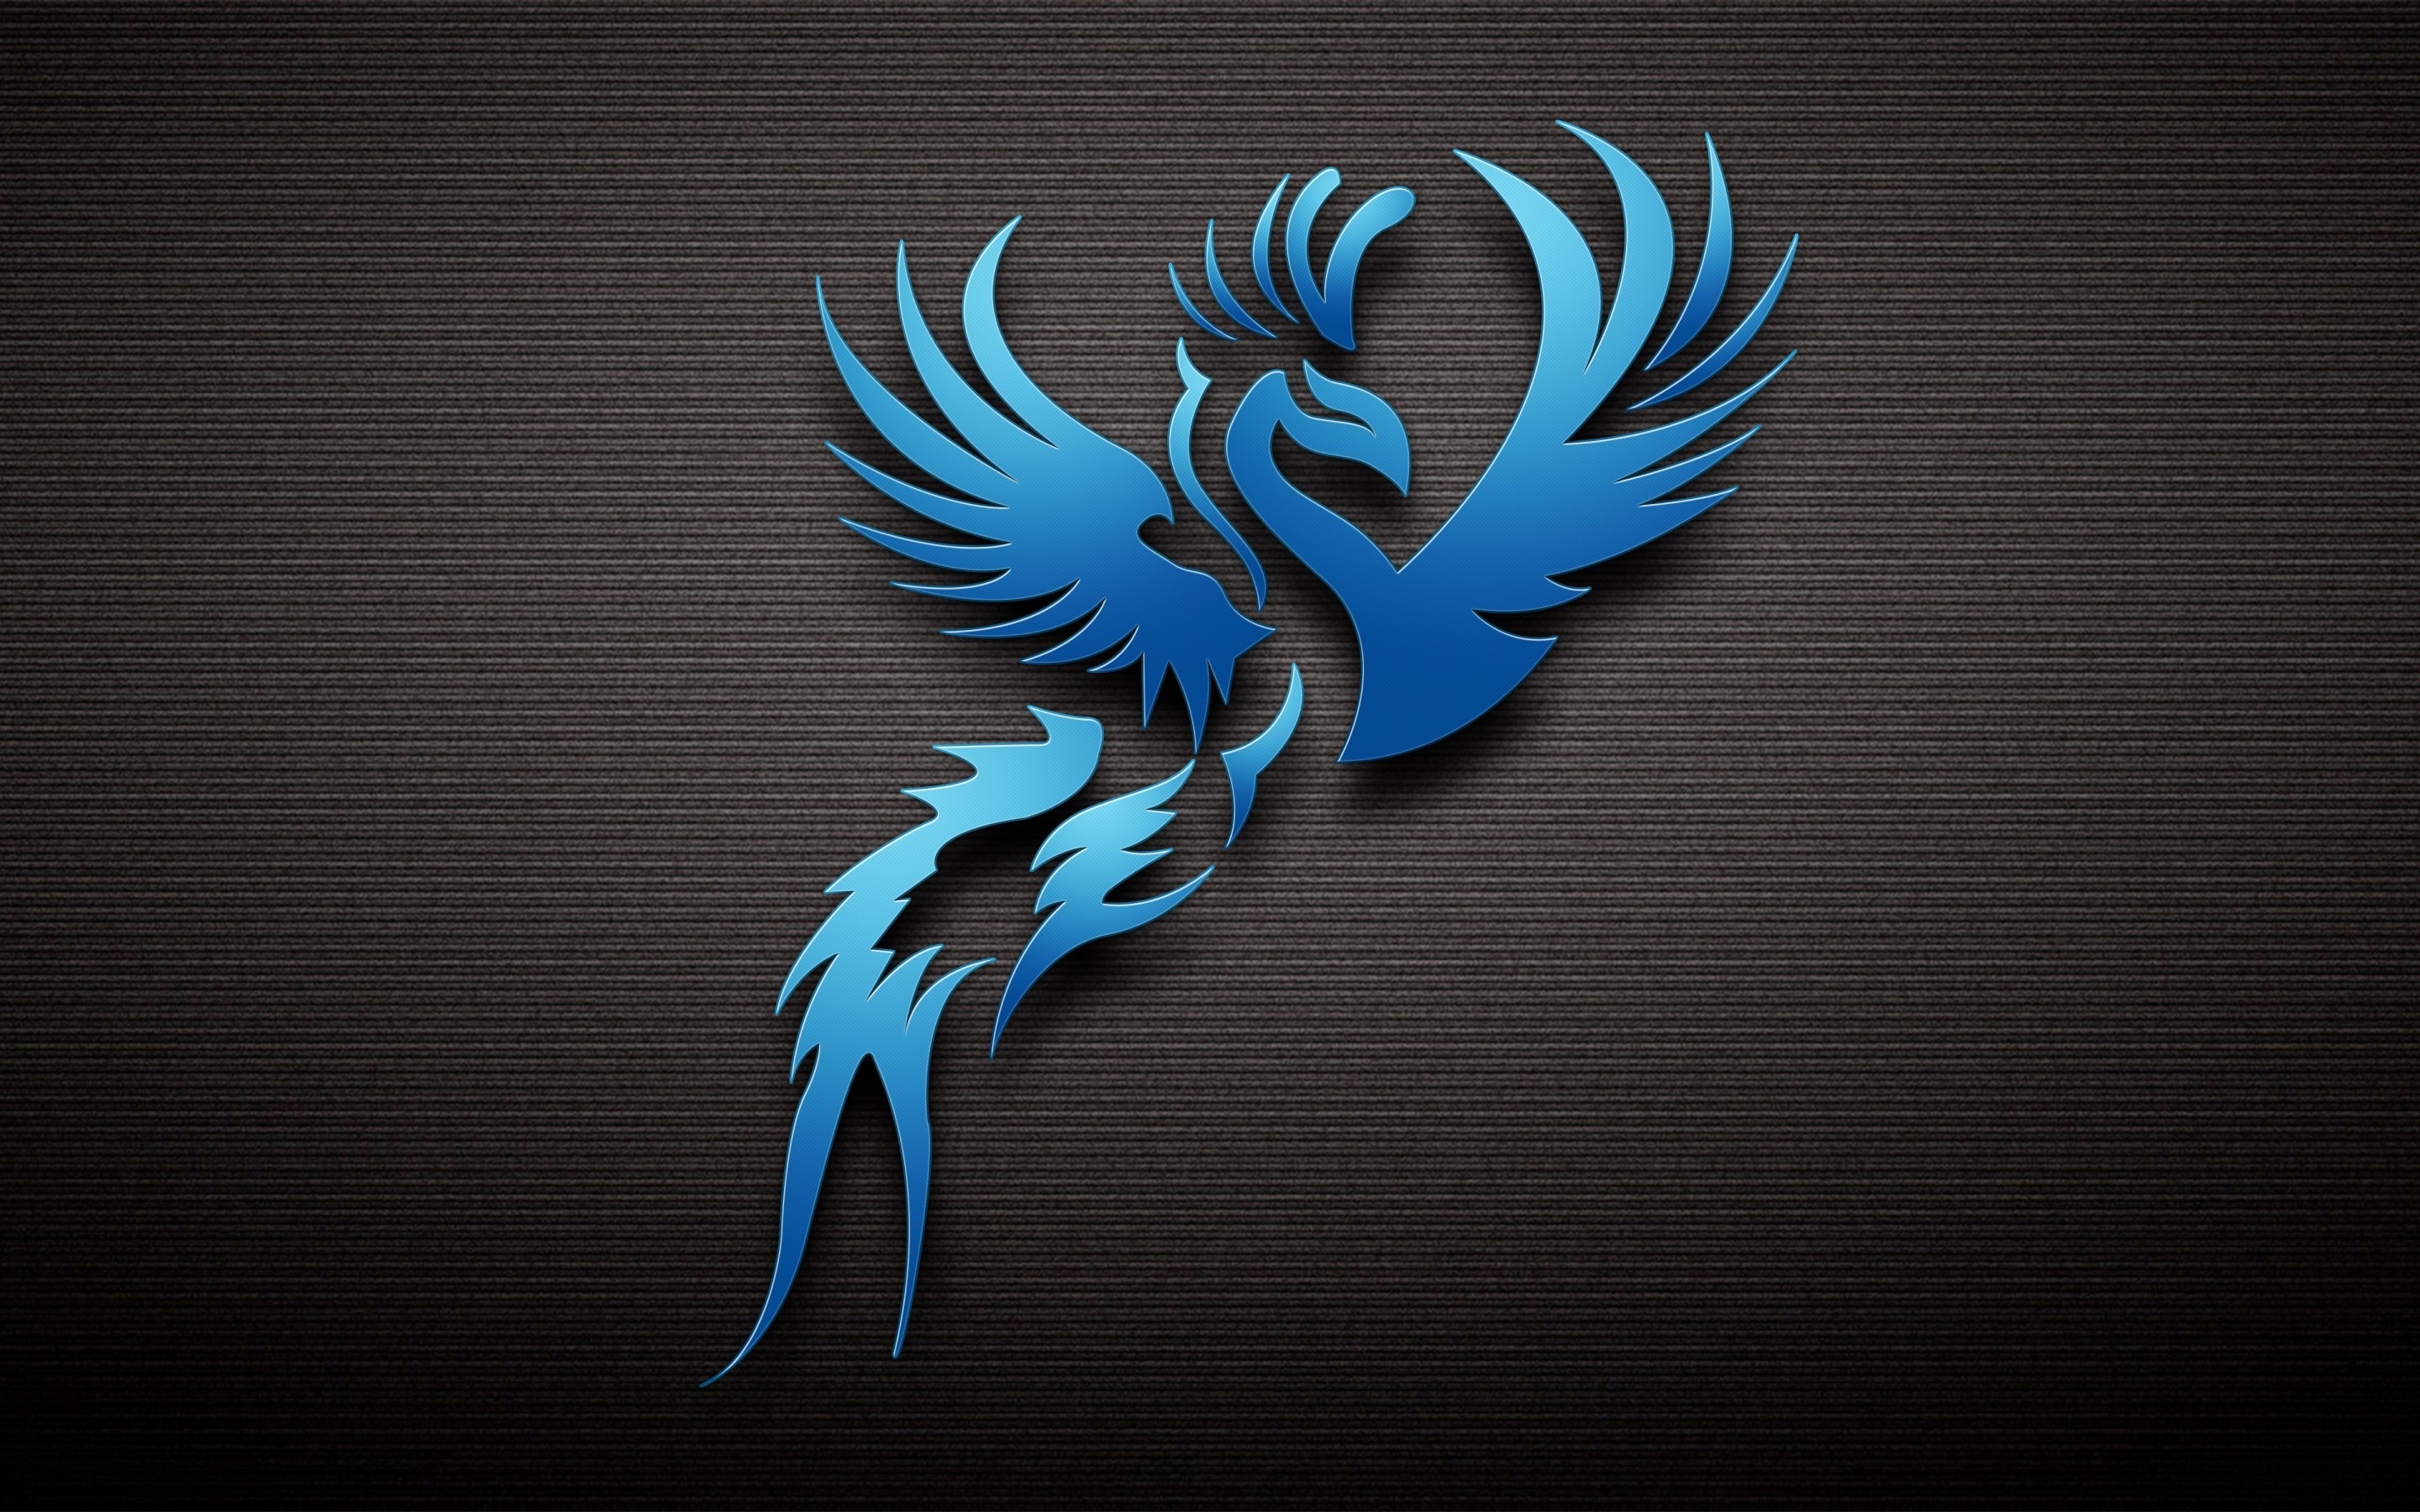 Dark Blue Bird for 2880 x 1800 Retina Display resolution